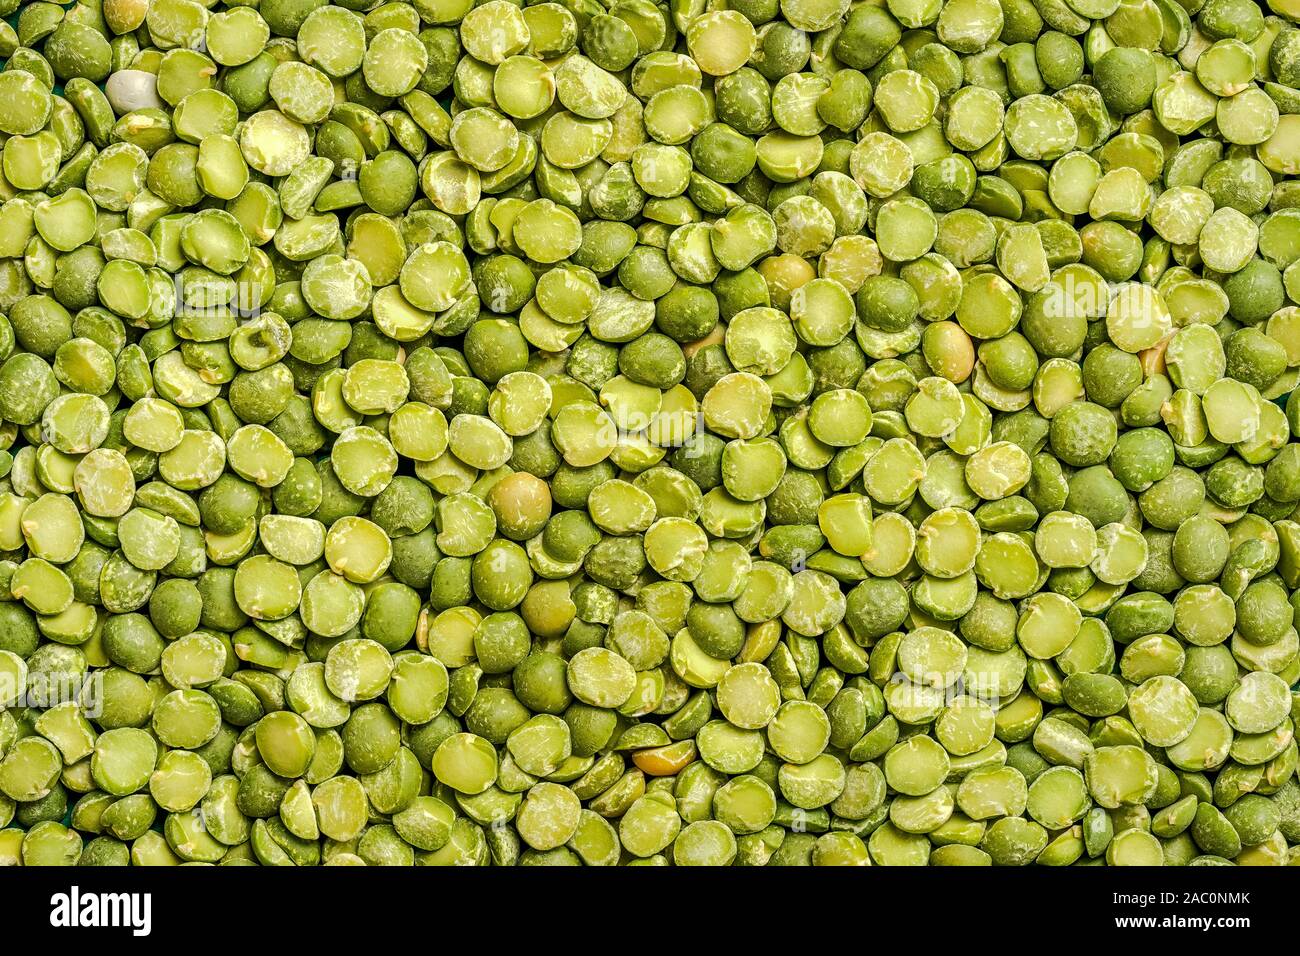 Full-screen image of green split peas Stock Photo